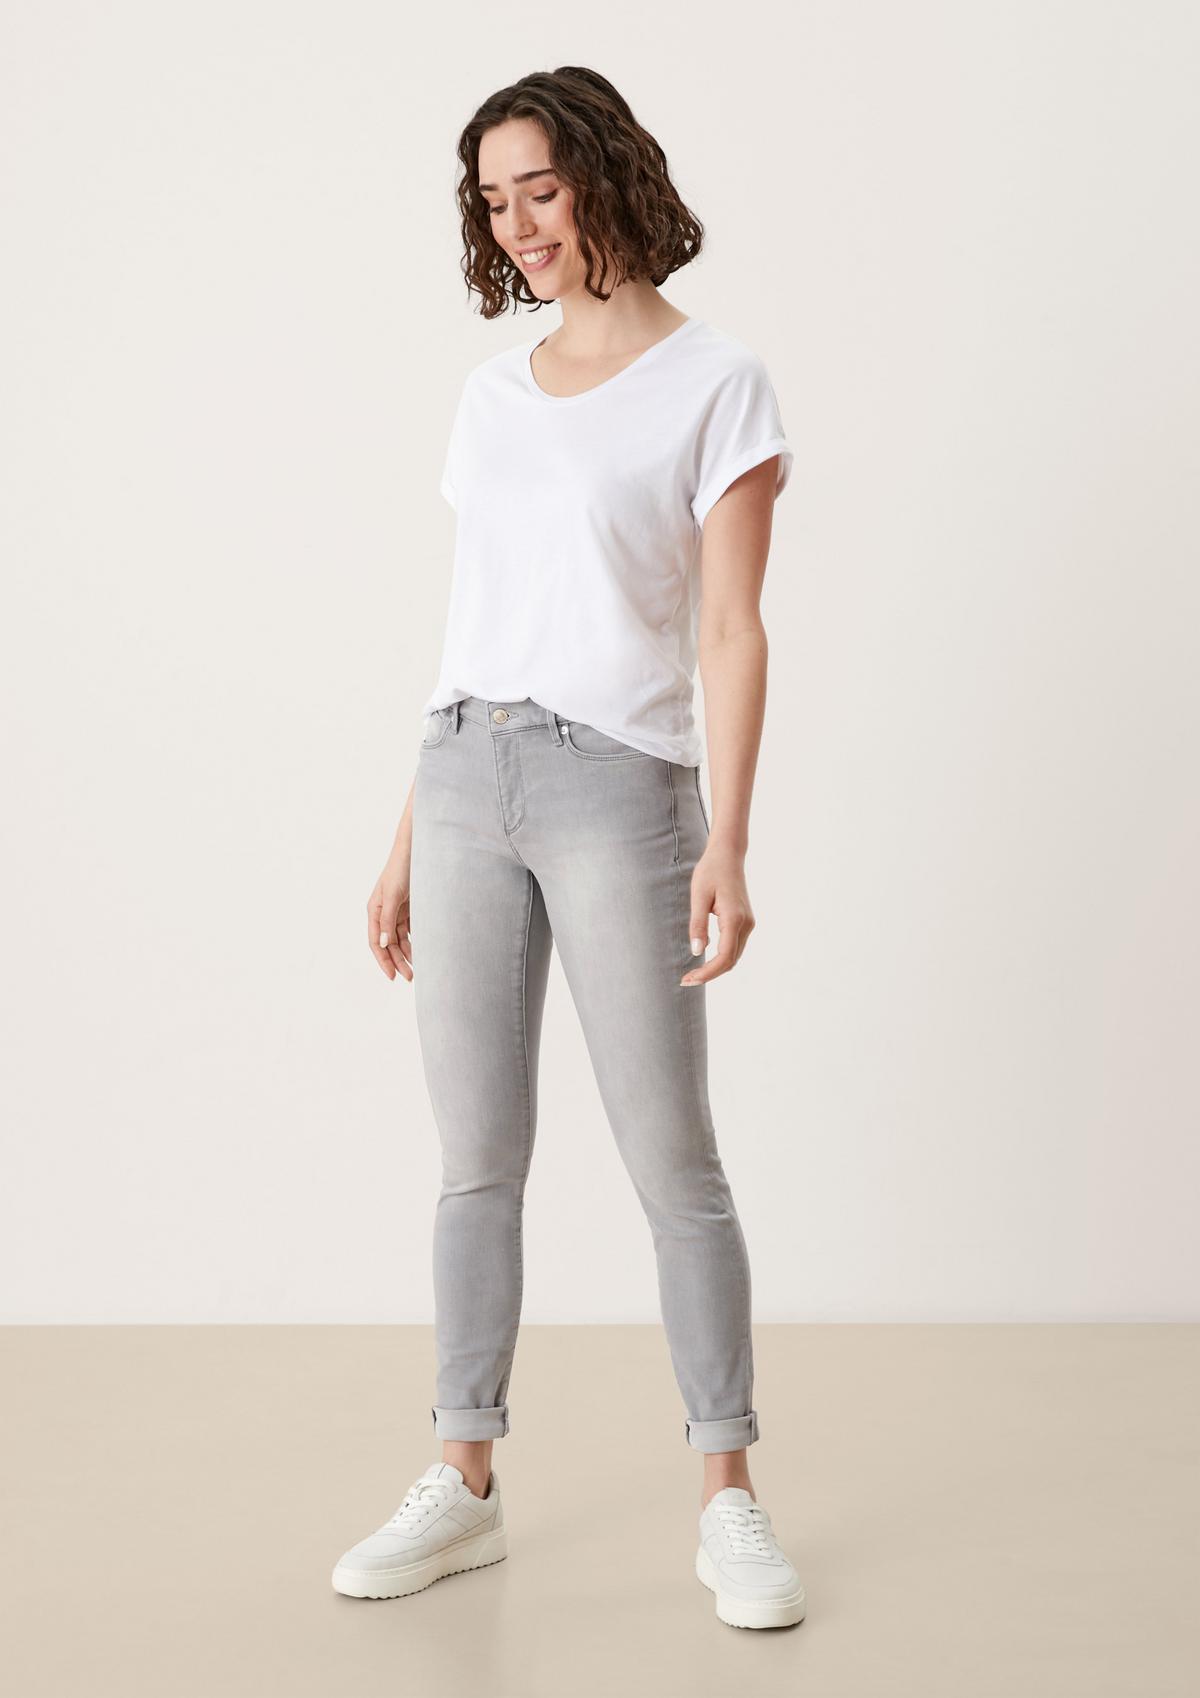 Izabell jeans / skinny fit / mid rise / skinny leg - stone